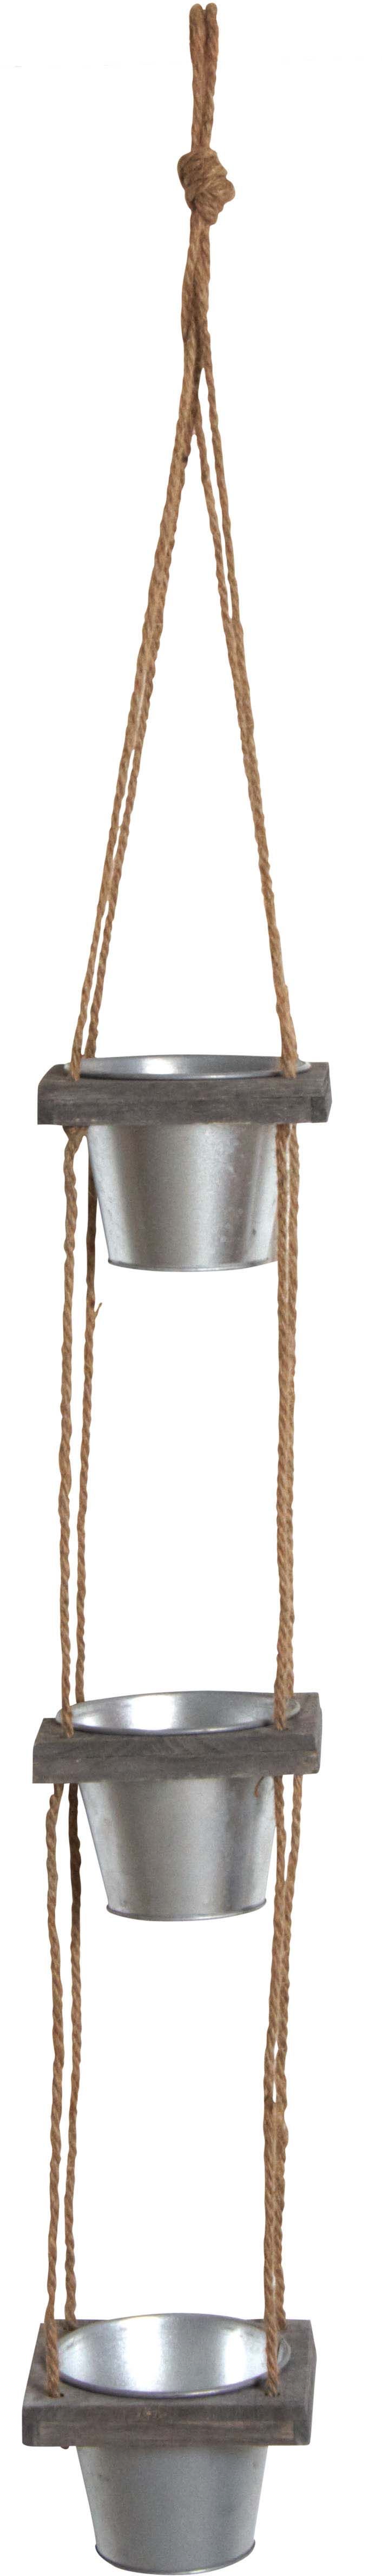 Suspension 3 cache-pots en acier galvanisé 115 cm